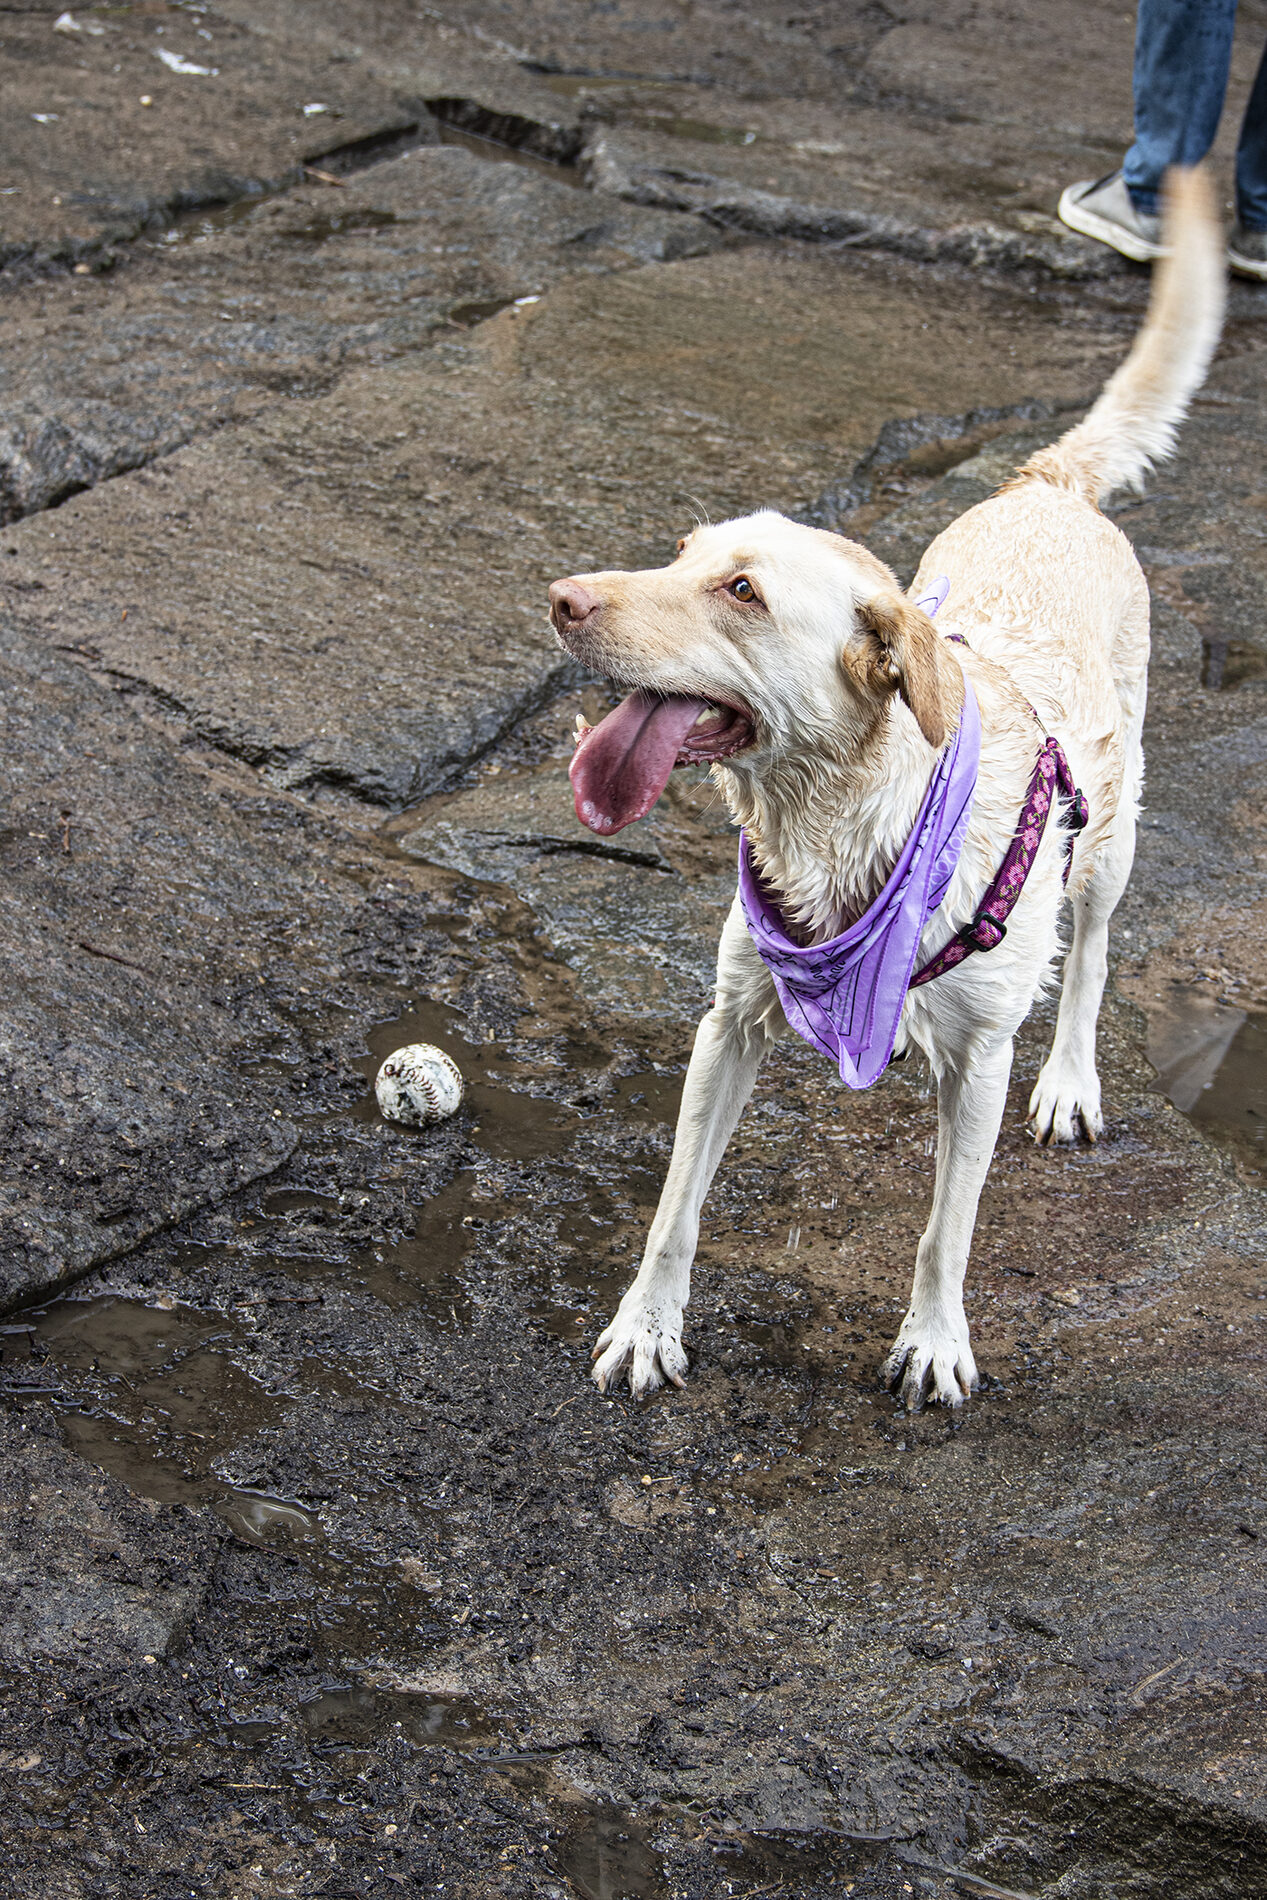 A damp dog wearing a purple bandana on some muddy rocks, a baseball in a puddle to its side.